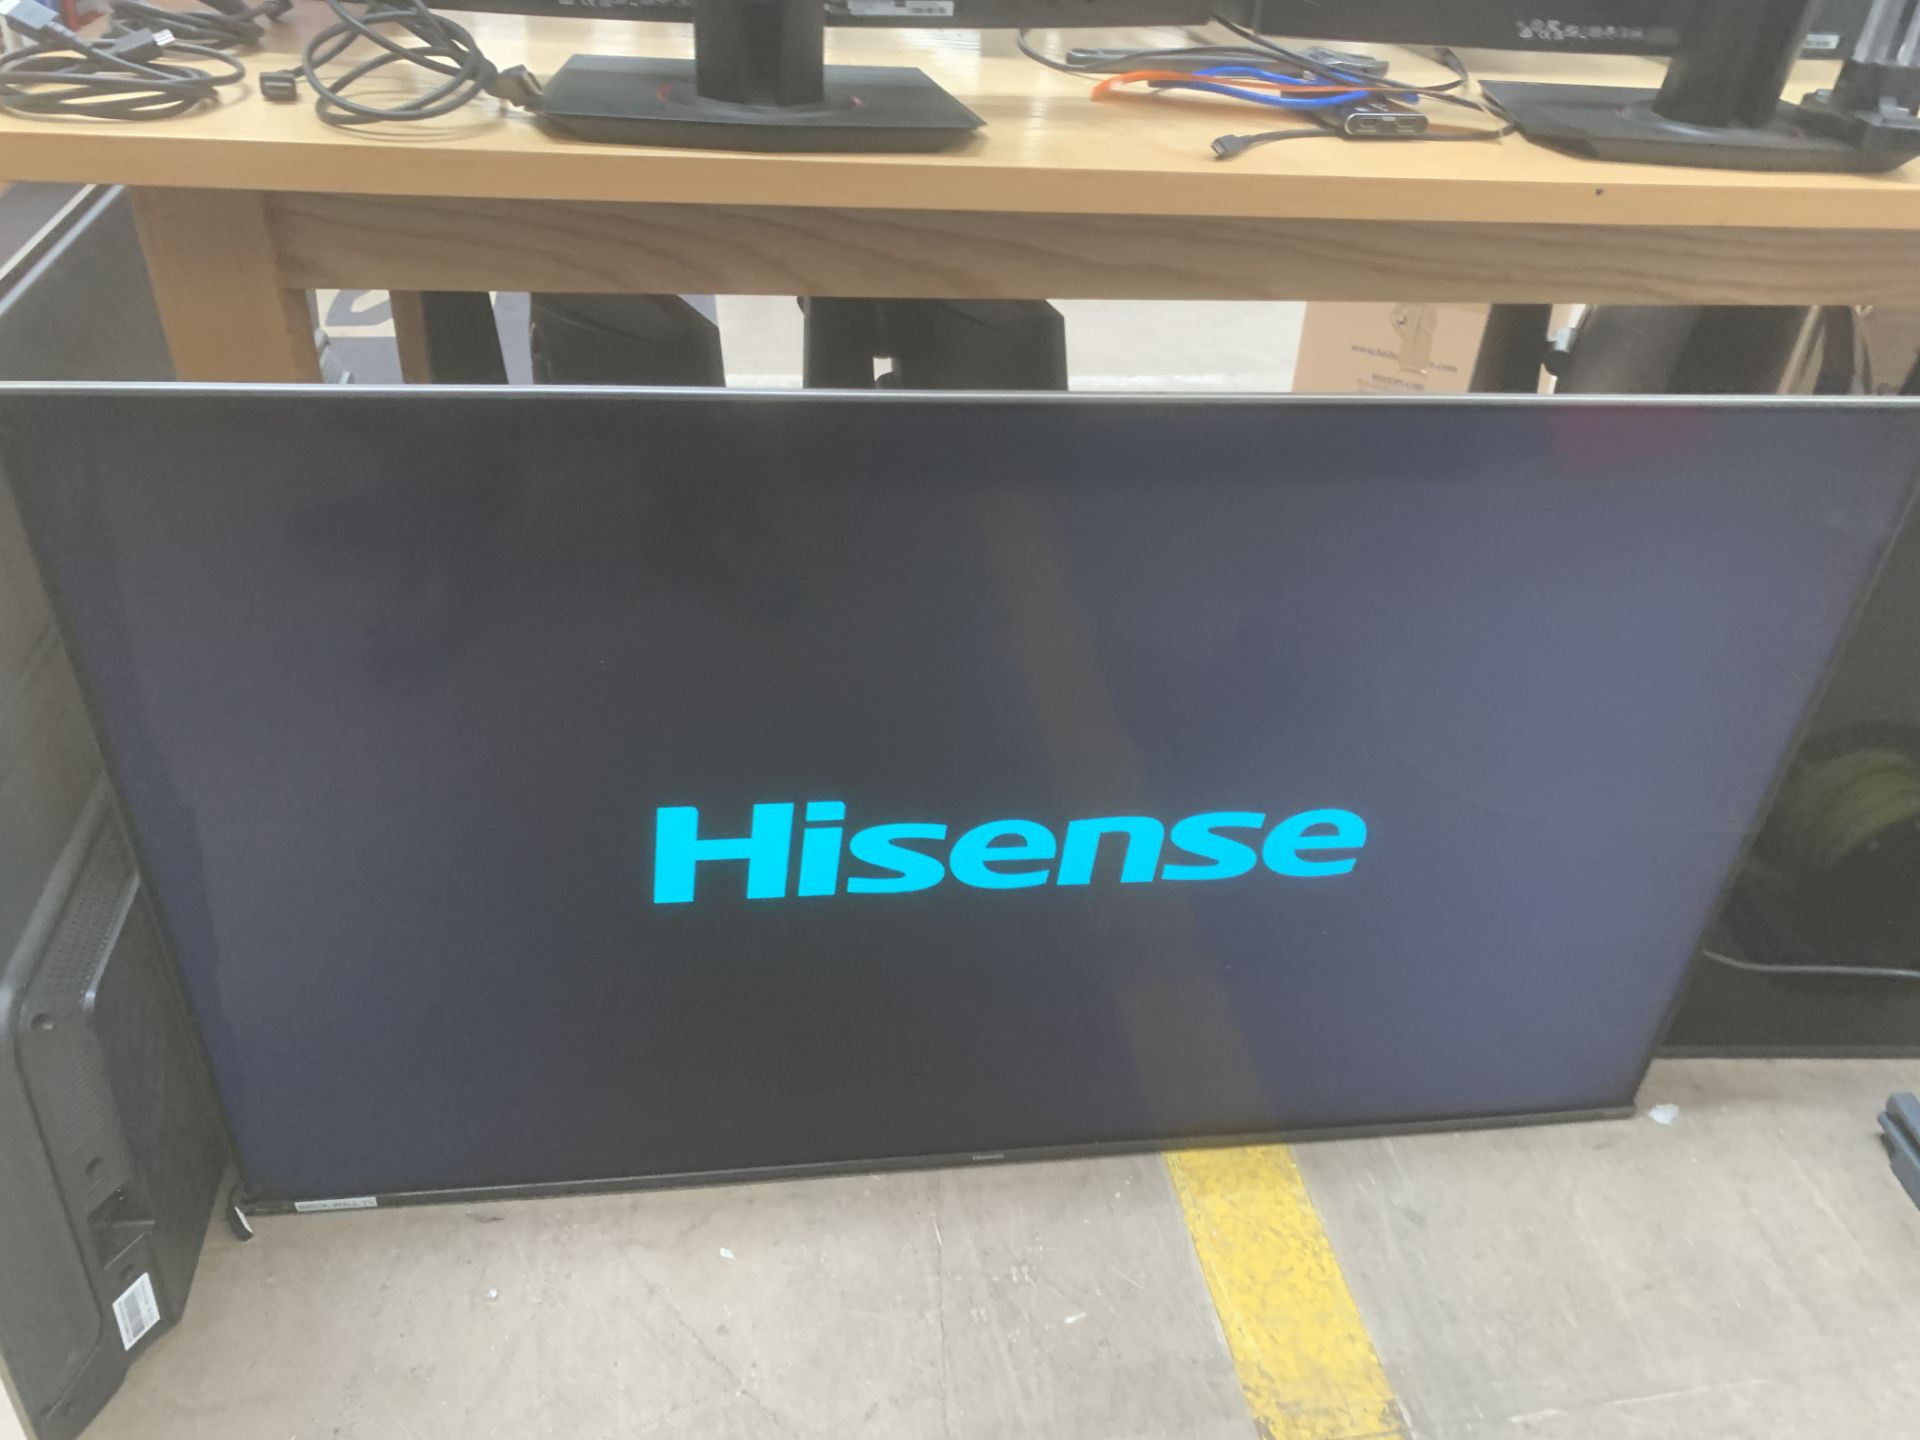 Hisense 55" television